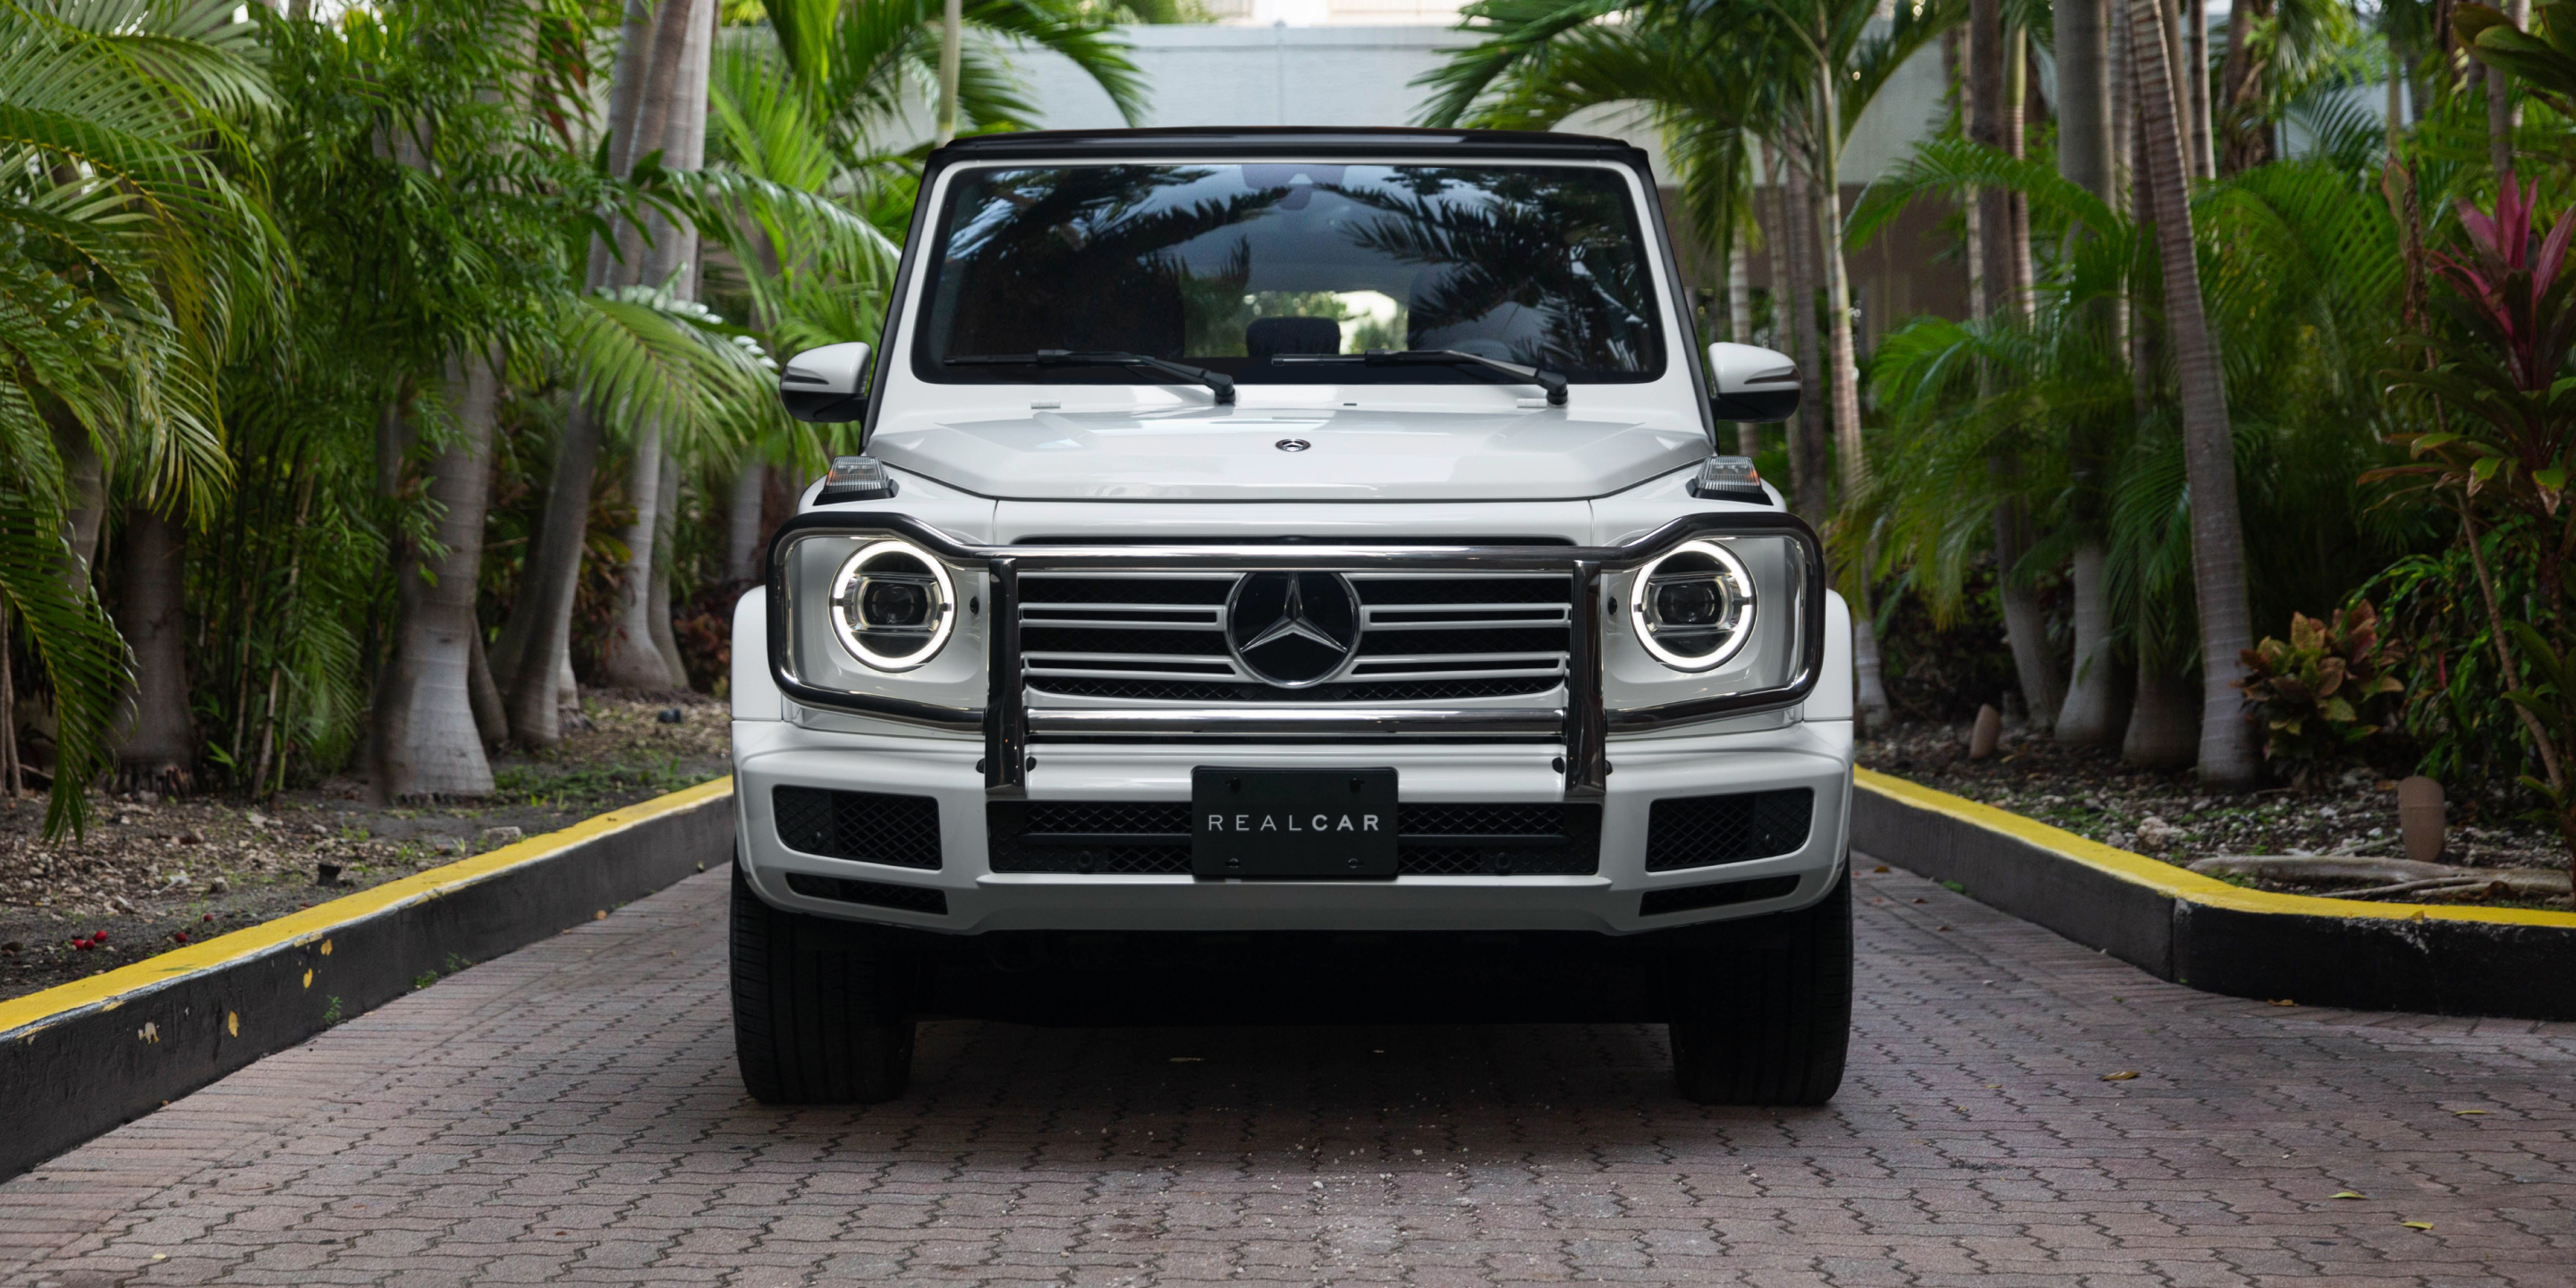 RealCar Mercedes Benz G-class for rental